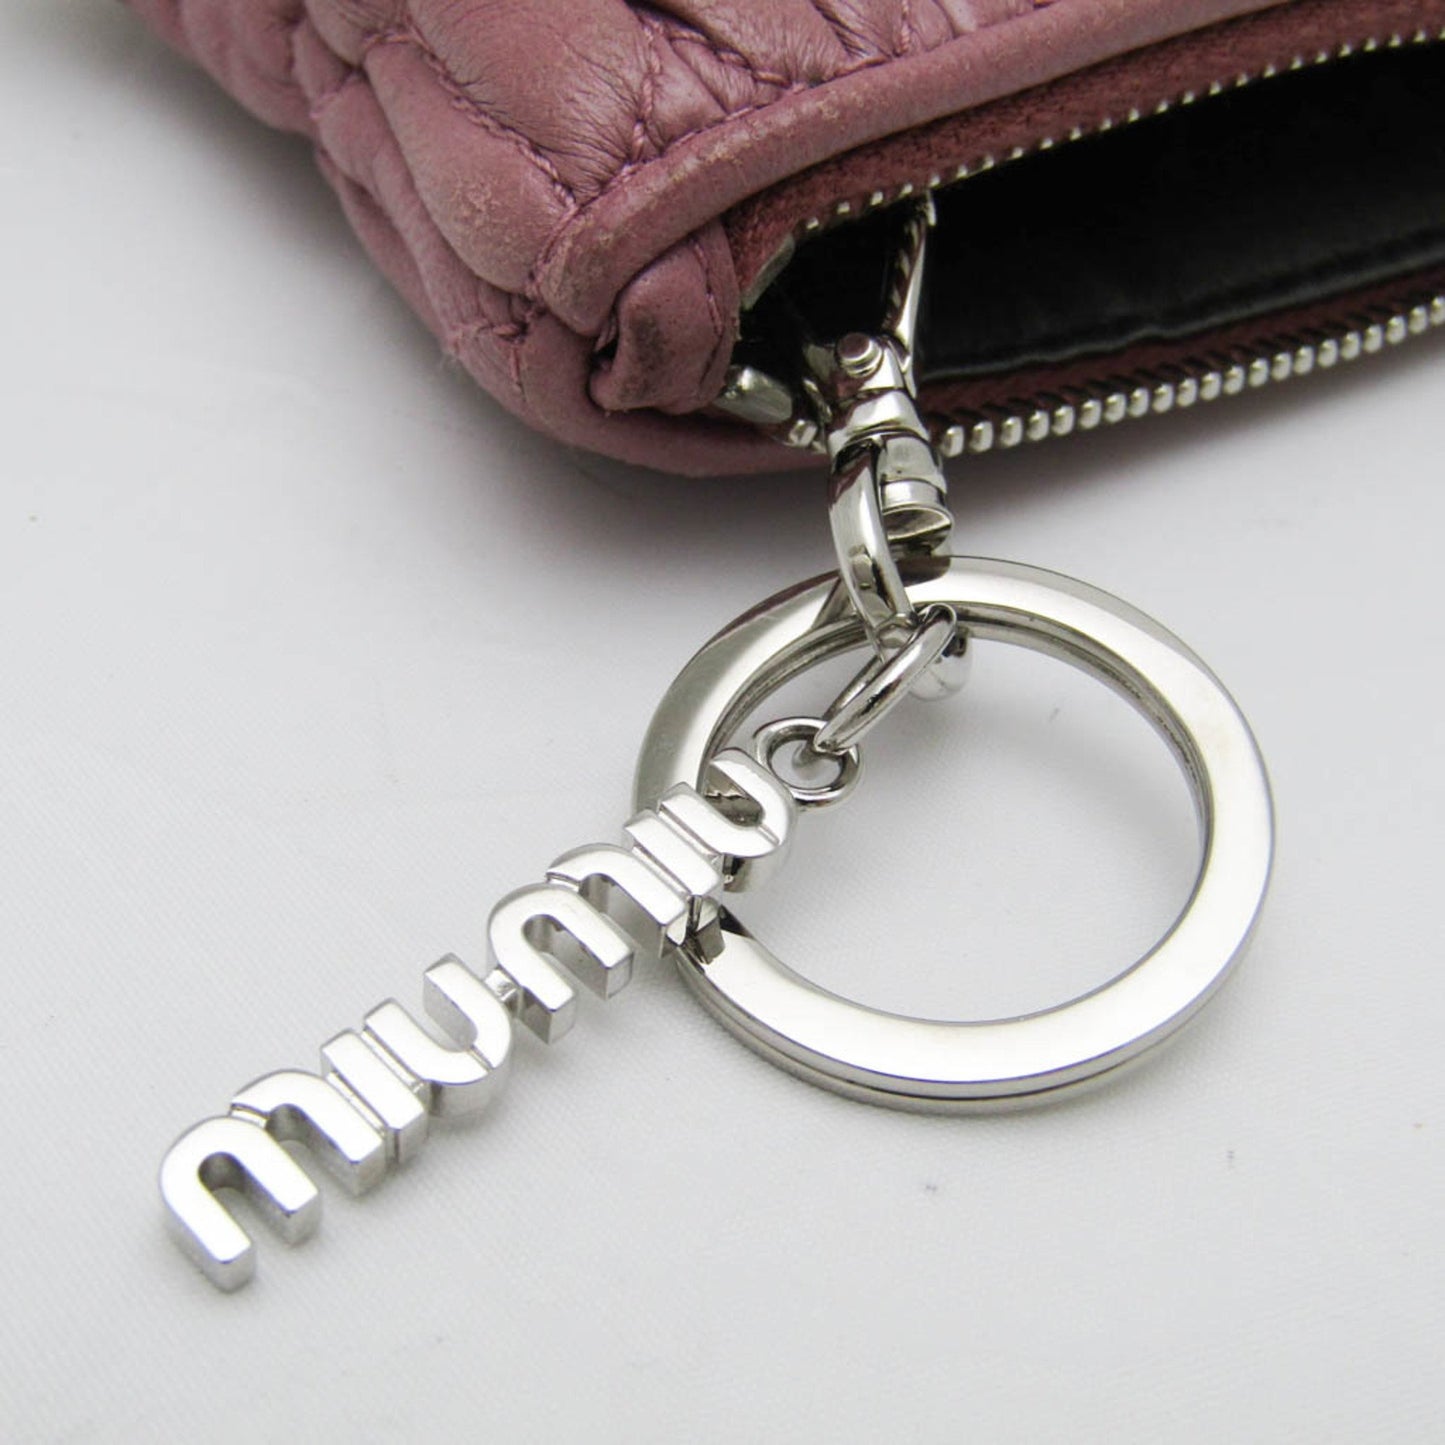 Miu Miu Women's Matelasse Leather Coin Purse with Key Ring in Purple